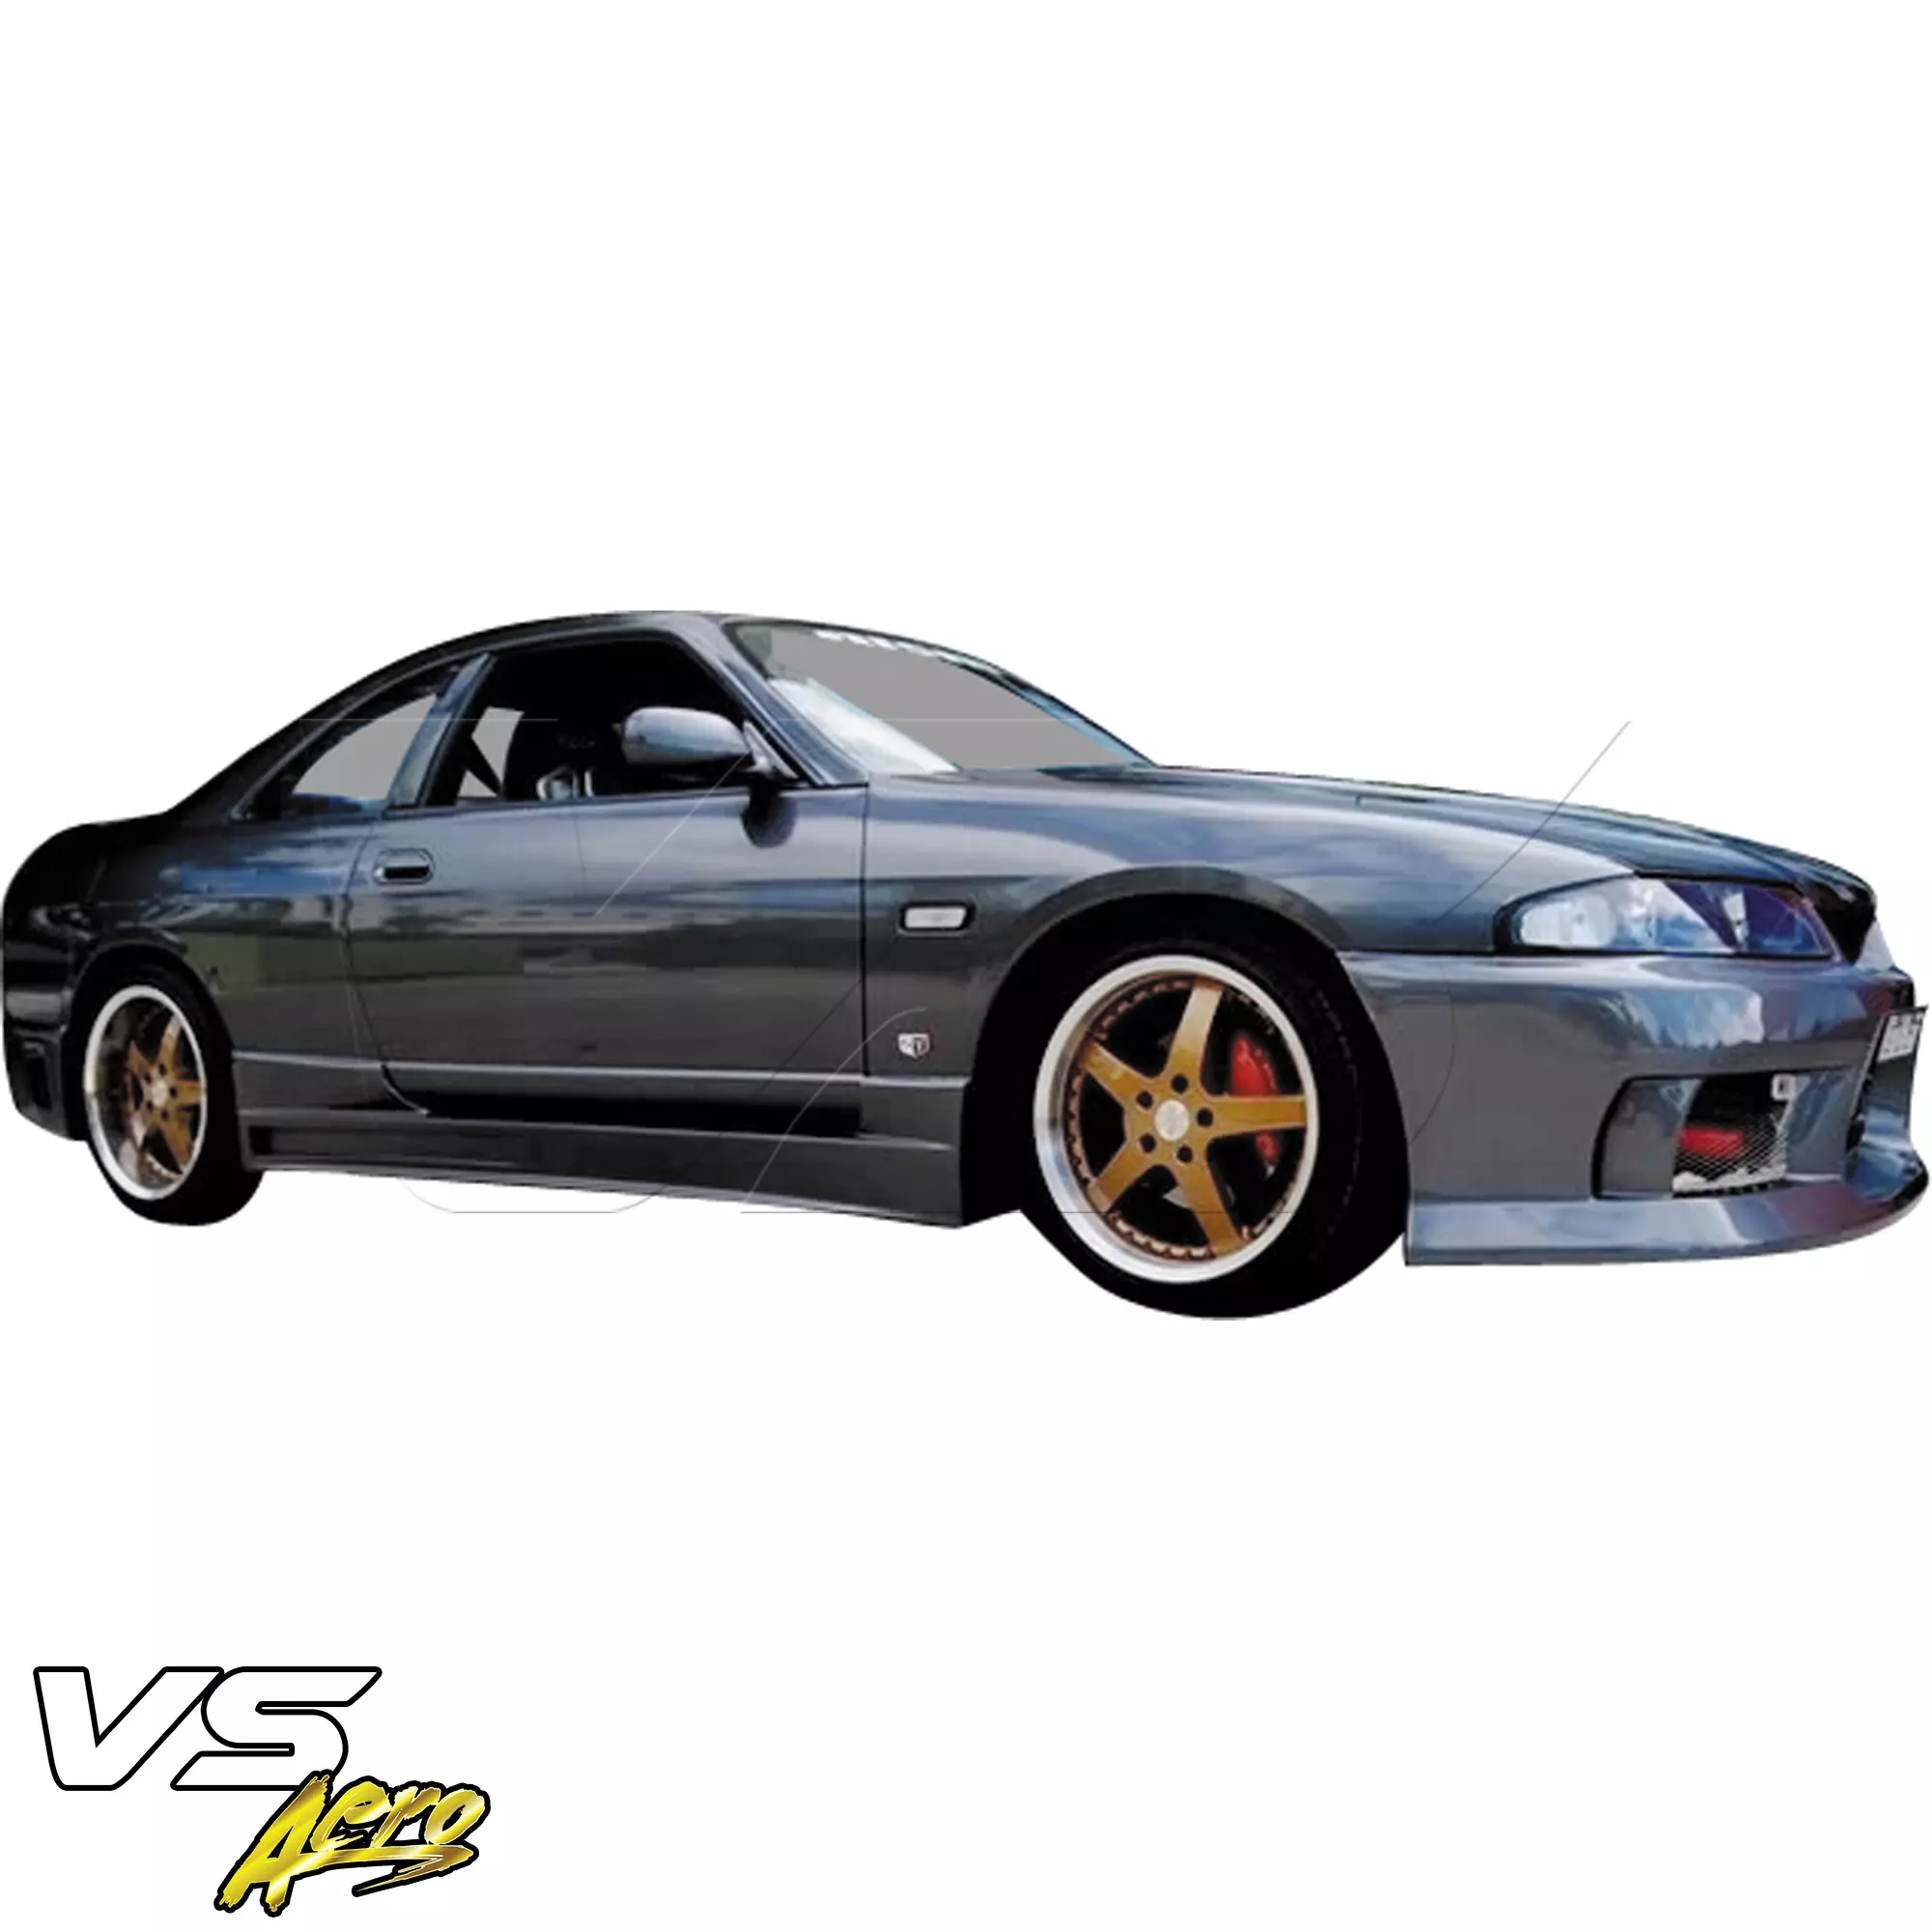 VSaero FRP MSPO v2 Body Kit 4pc > Nissan Skyline R33 GTS 1995-1998 > 2dr Coupe - Image 12